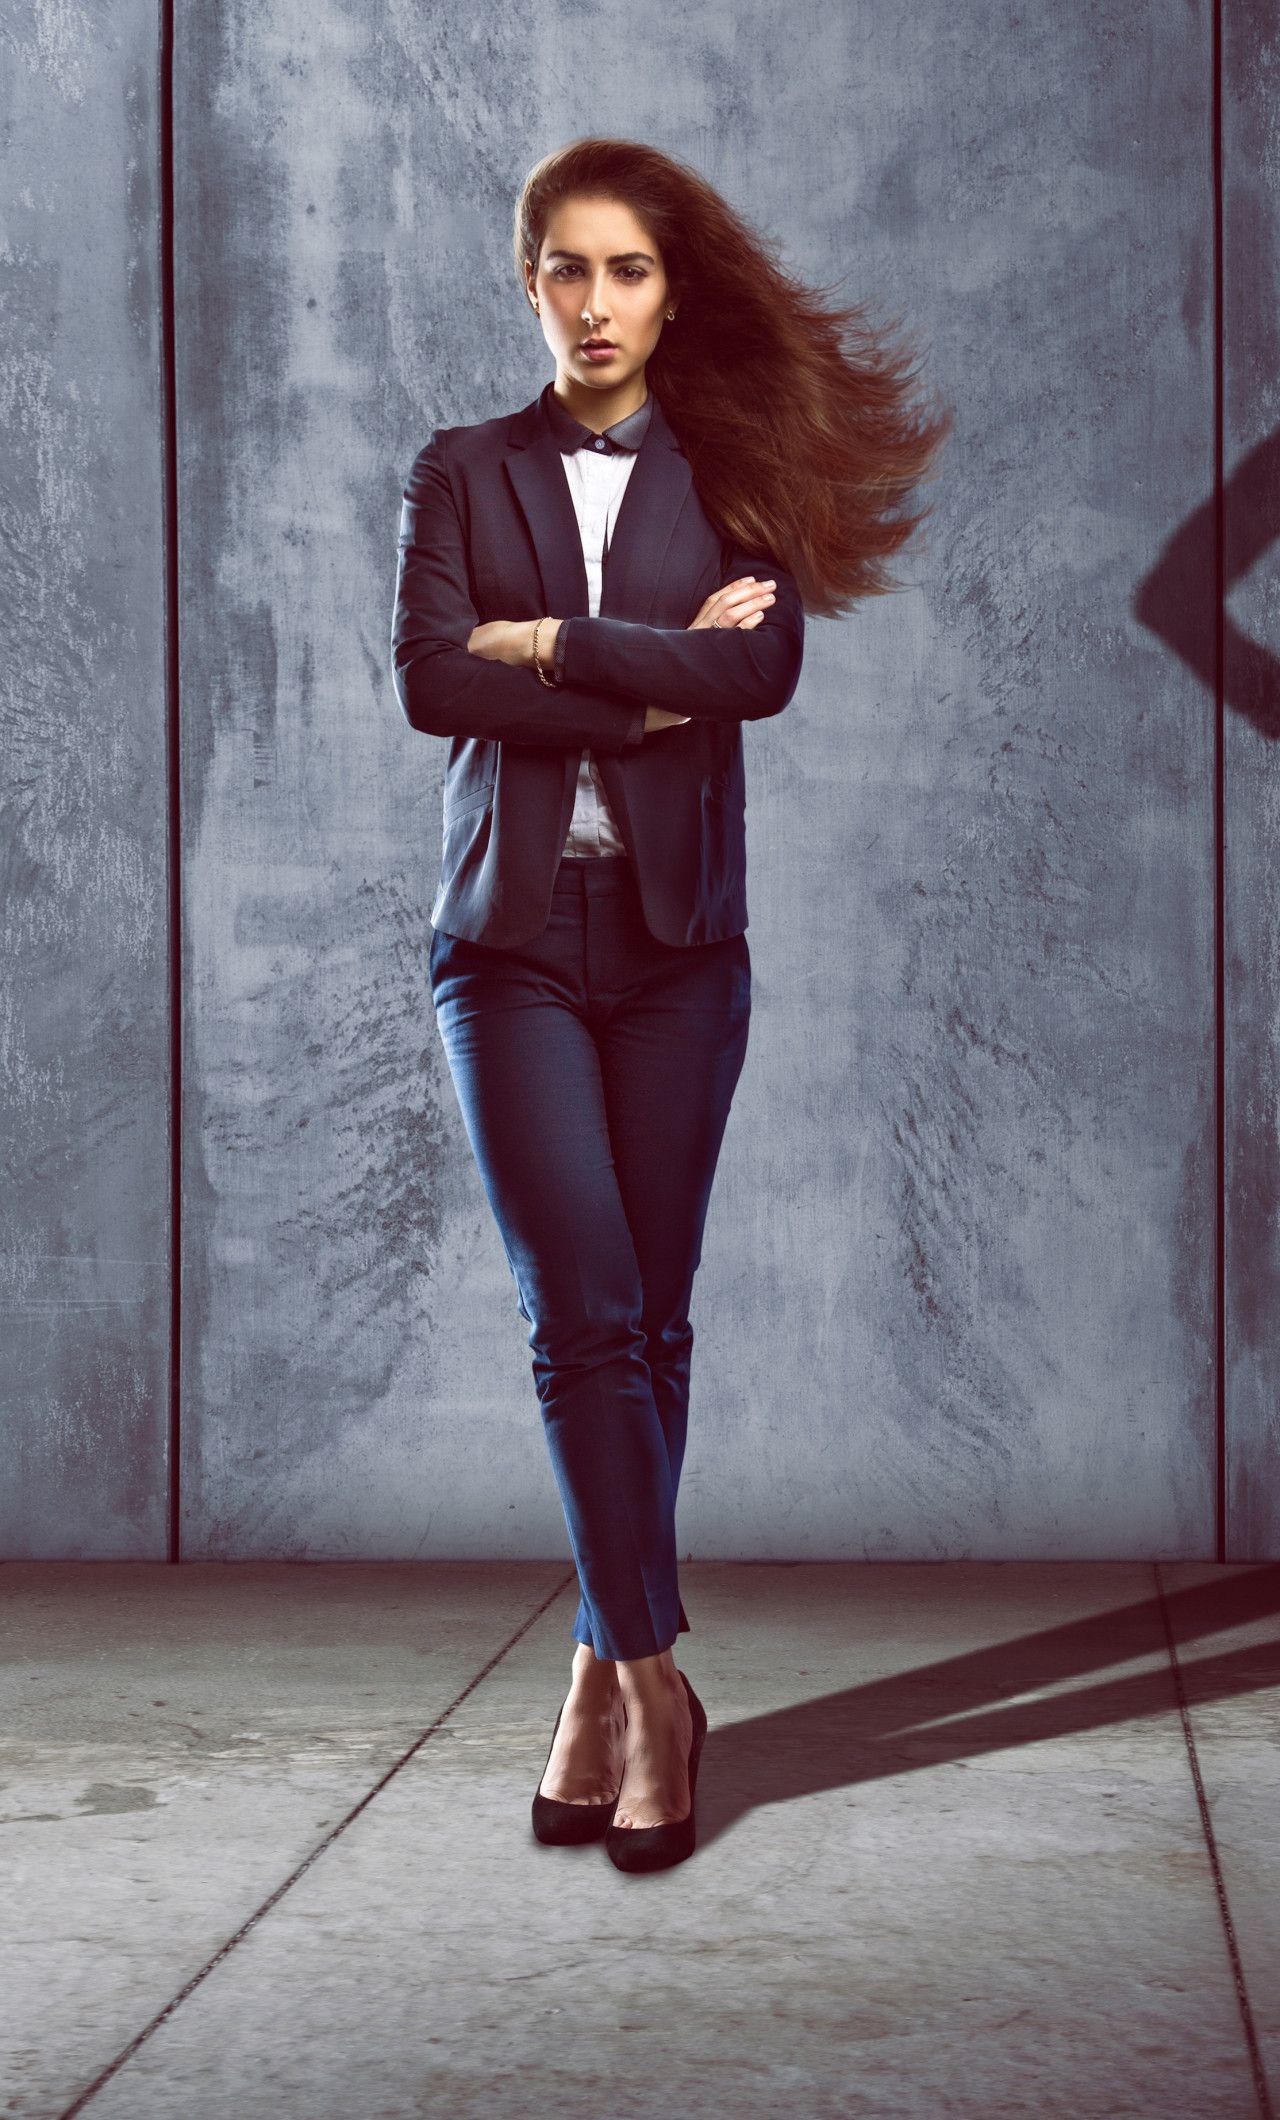 Business Woman Superhero iPhone HD 4k Wallpaper